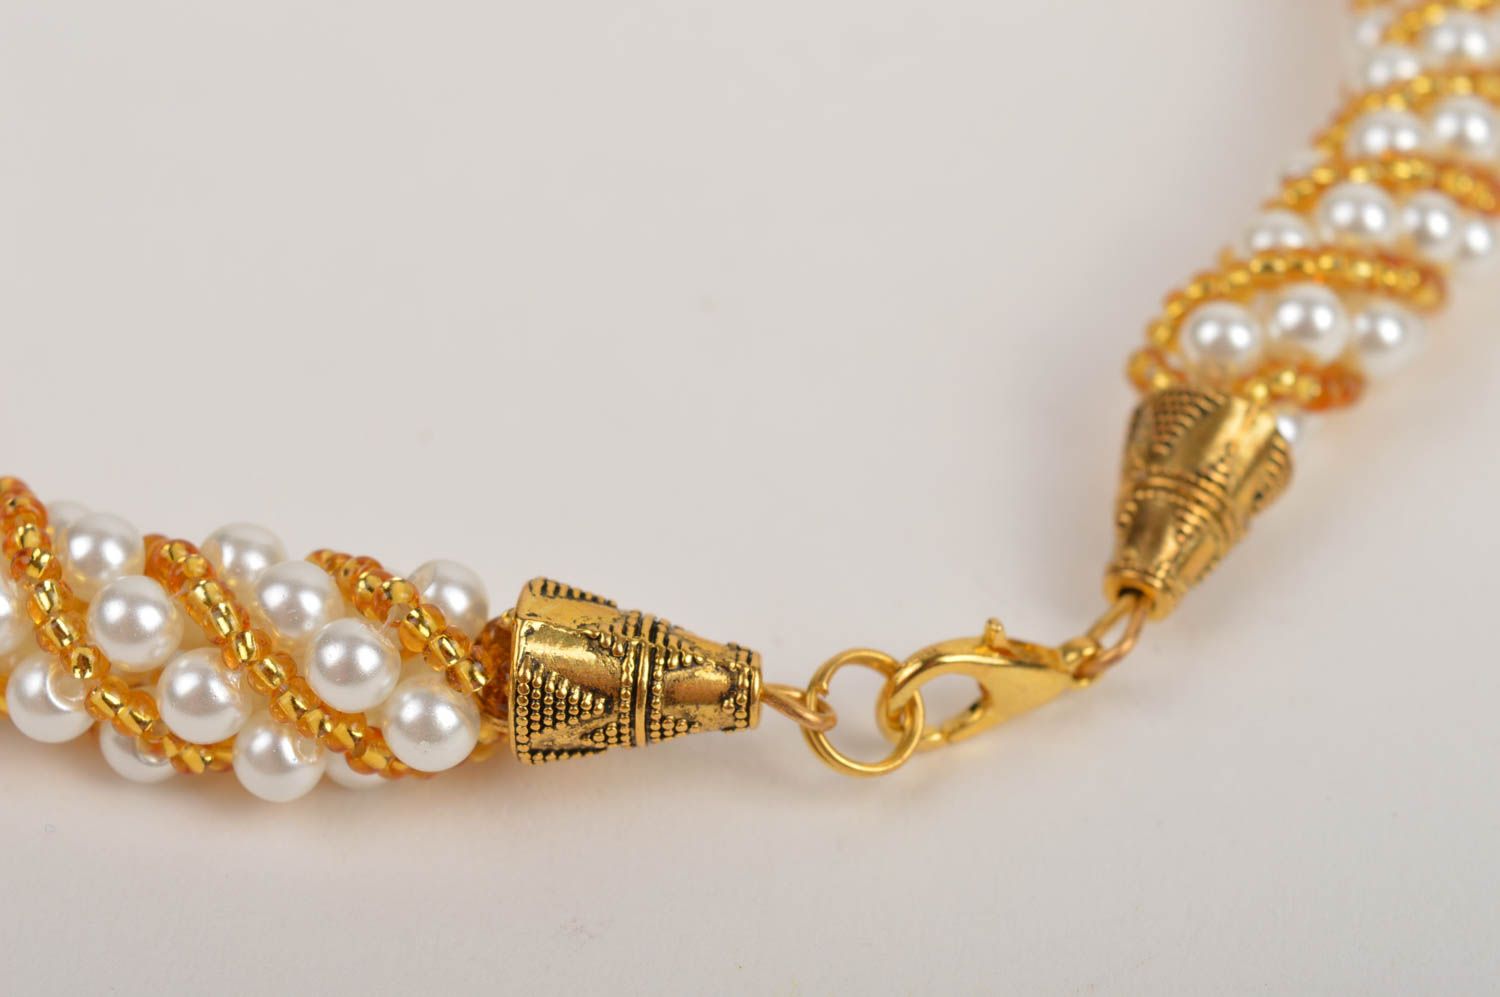 Handmade necklace designer accessory beaded jewelry unusual necklace gift ideas photo 3